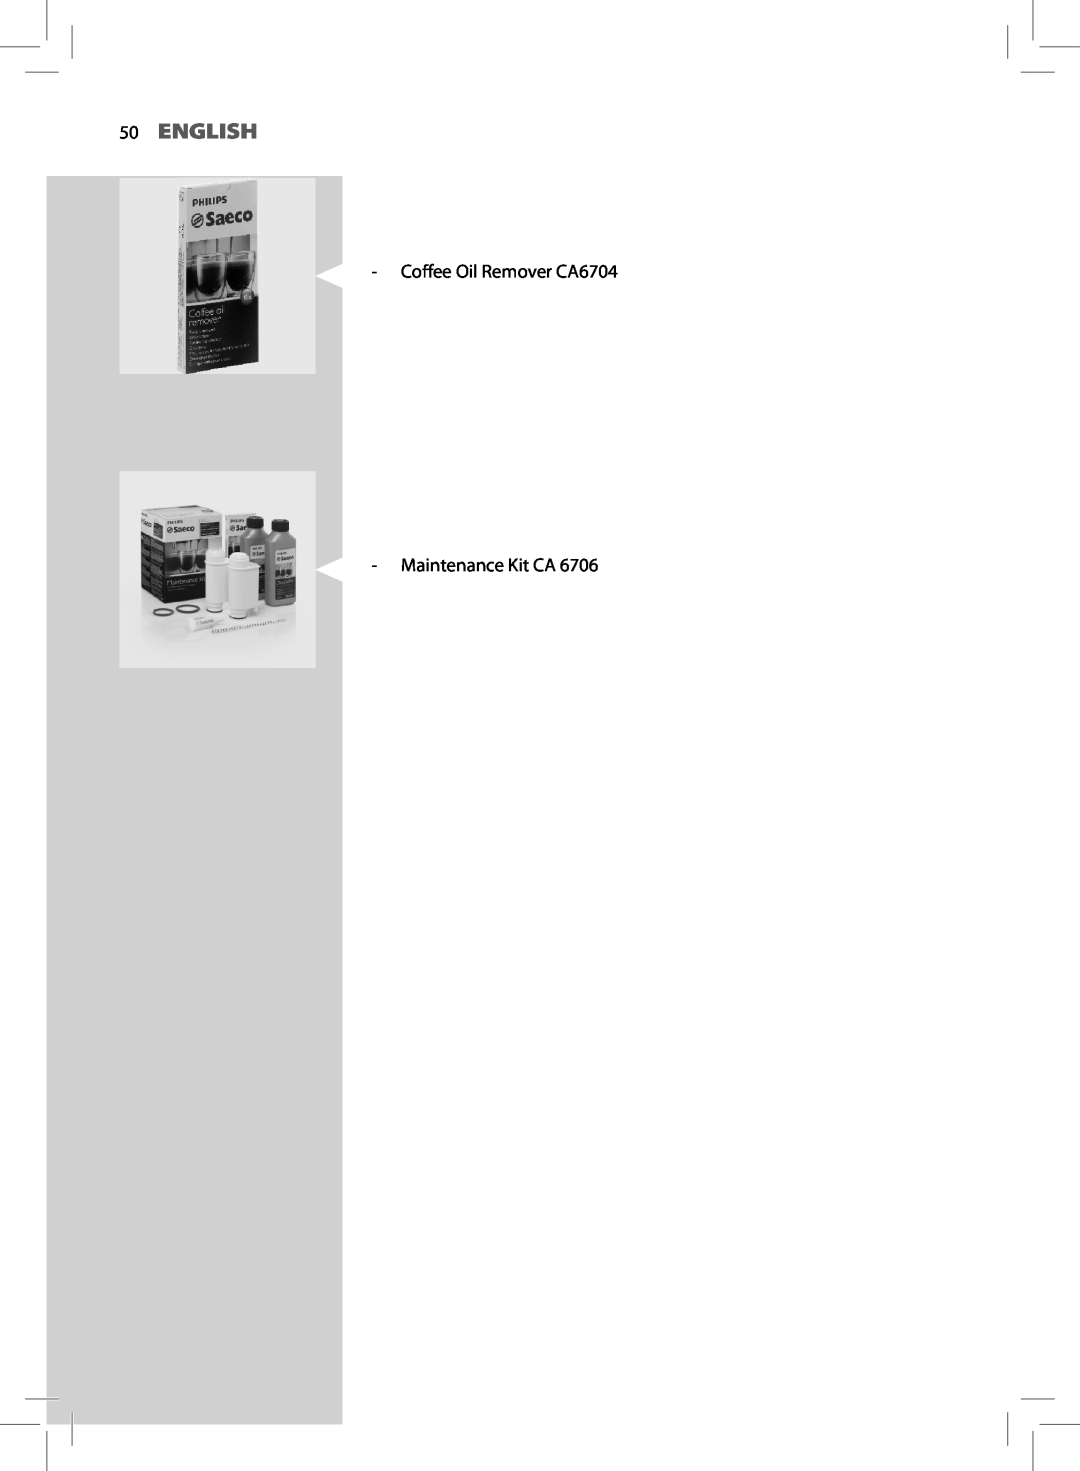 Saeco Coffee Makers HD8764, HD8761 manual English, Coffee Oil Remover CA6704 Maintenance Kit CA 